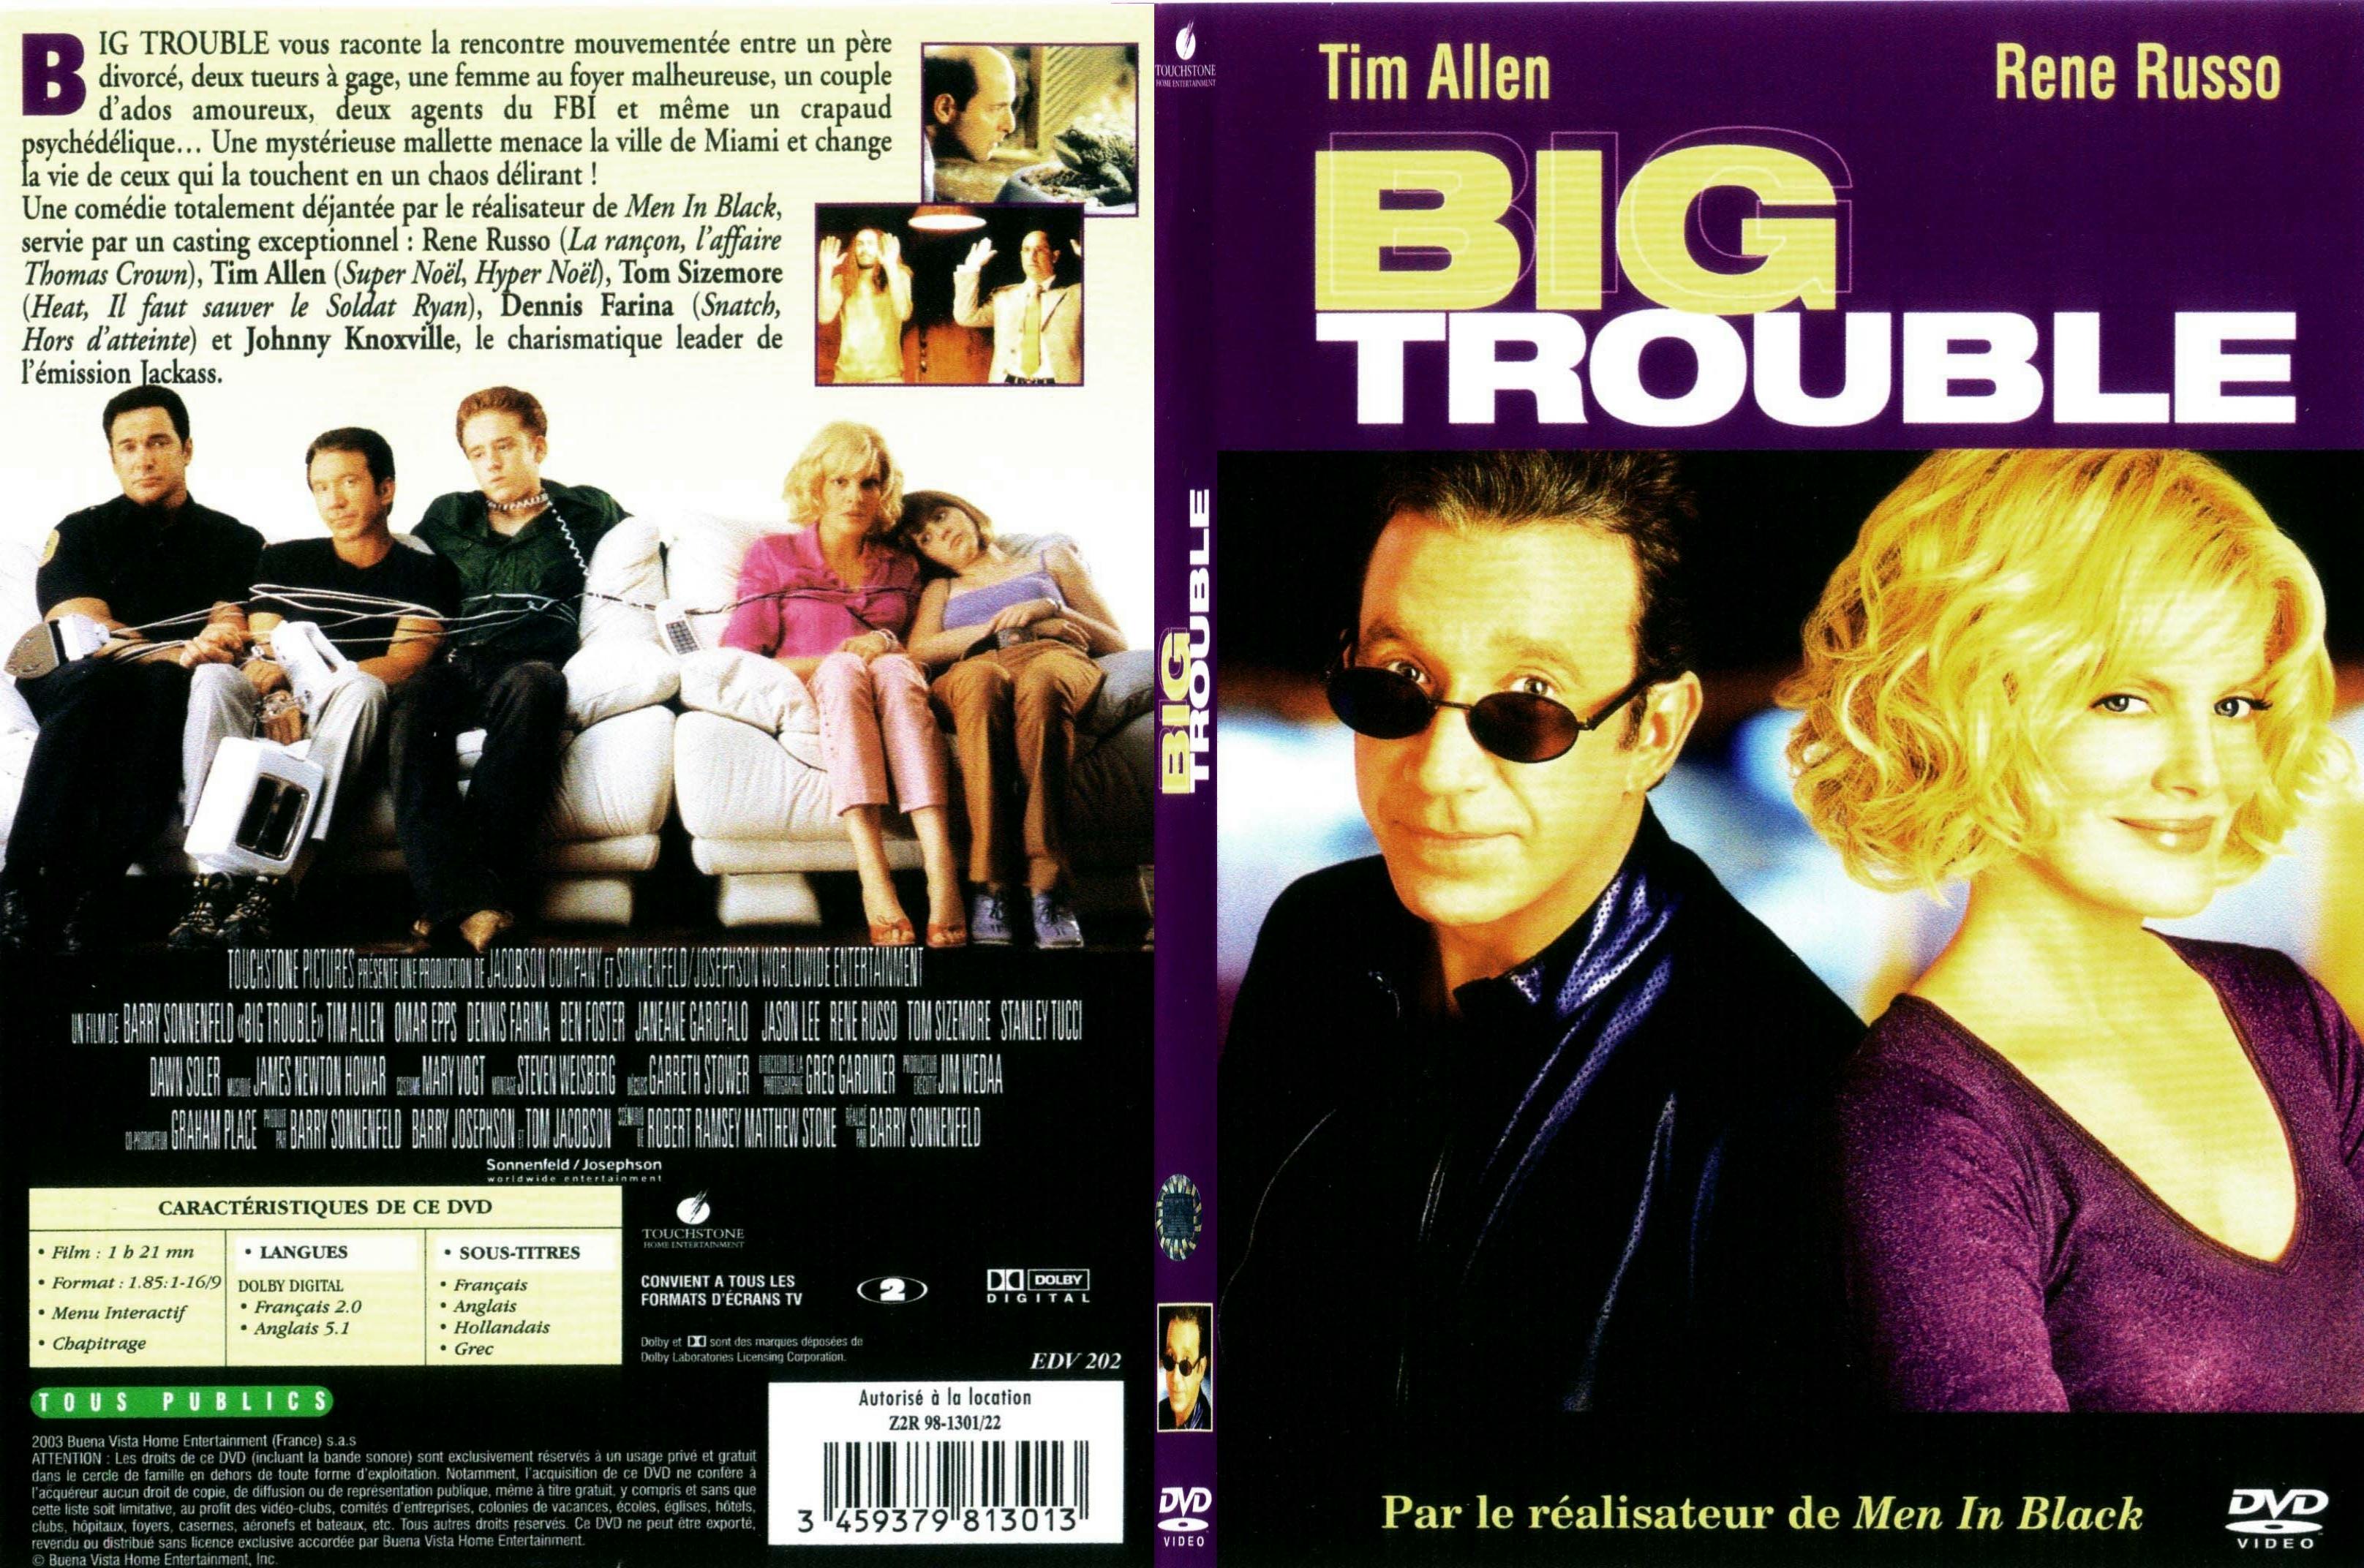 Jaquette DVD Big trouble - SLIM